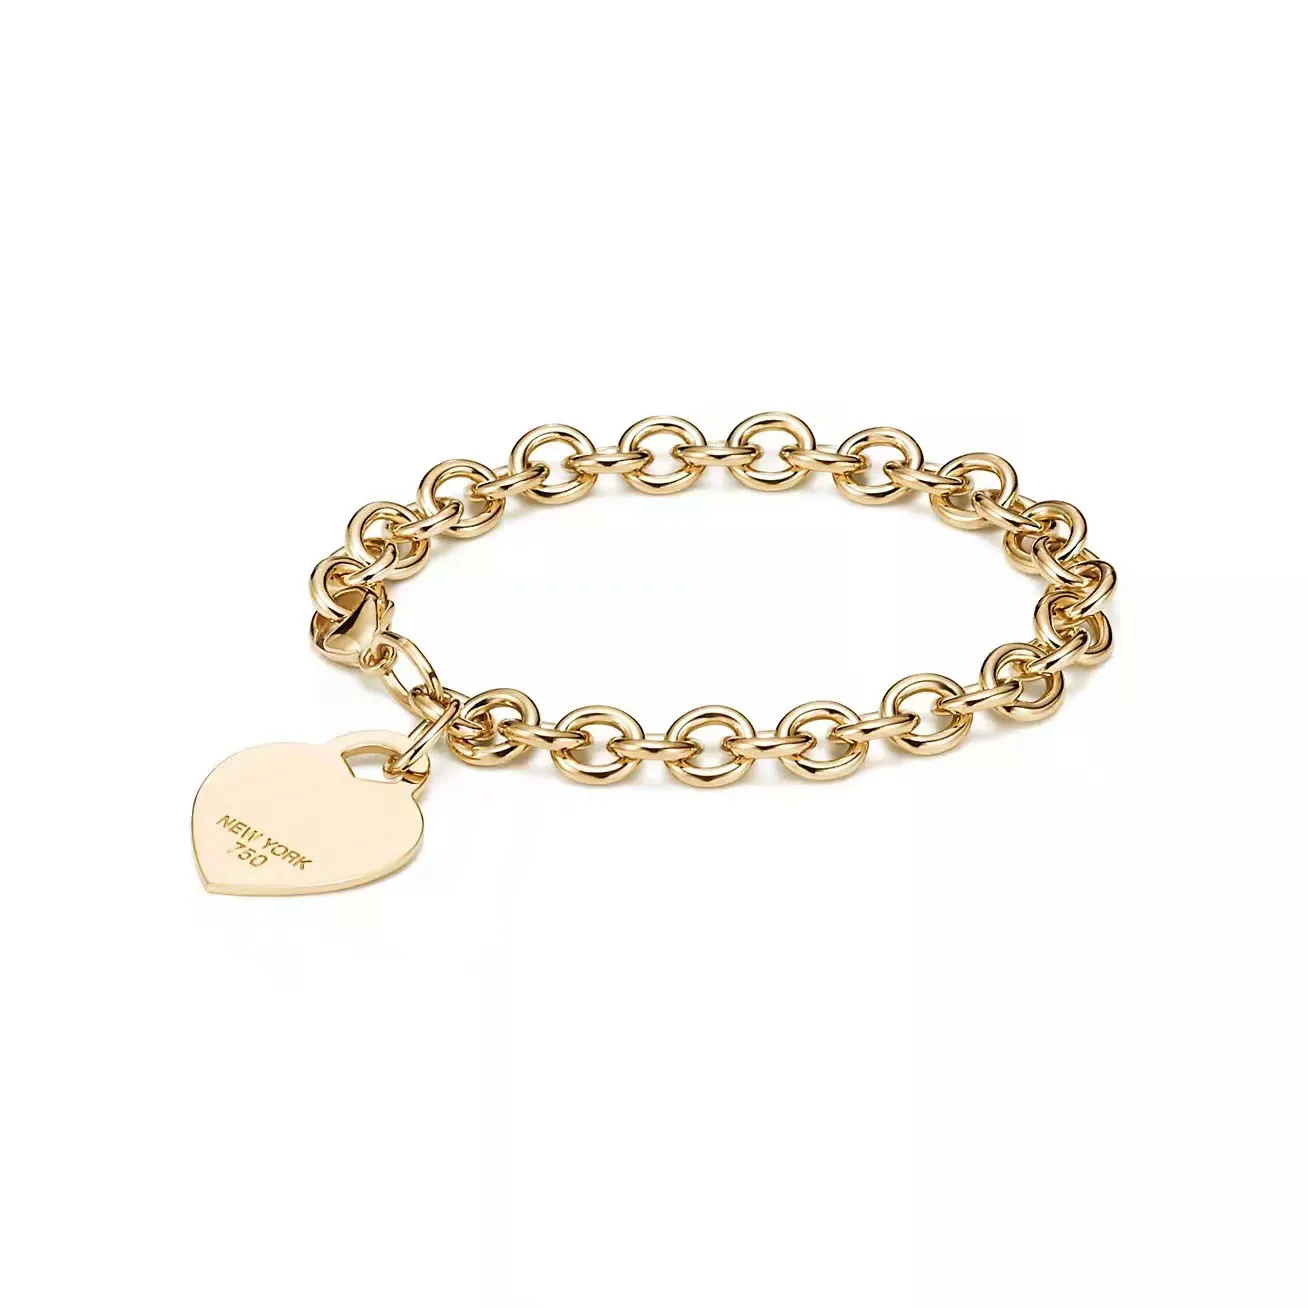 New Look Bracelet Couples Charm Bracelet for Girls, Love Heart Charmbeaded Delicate Bracelet Romantic Gift Jewelry for Women Gifts Christmas